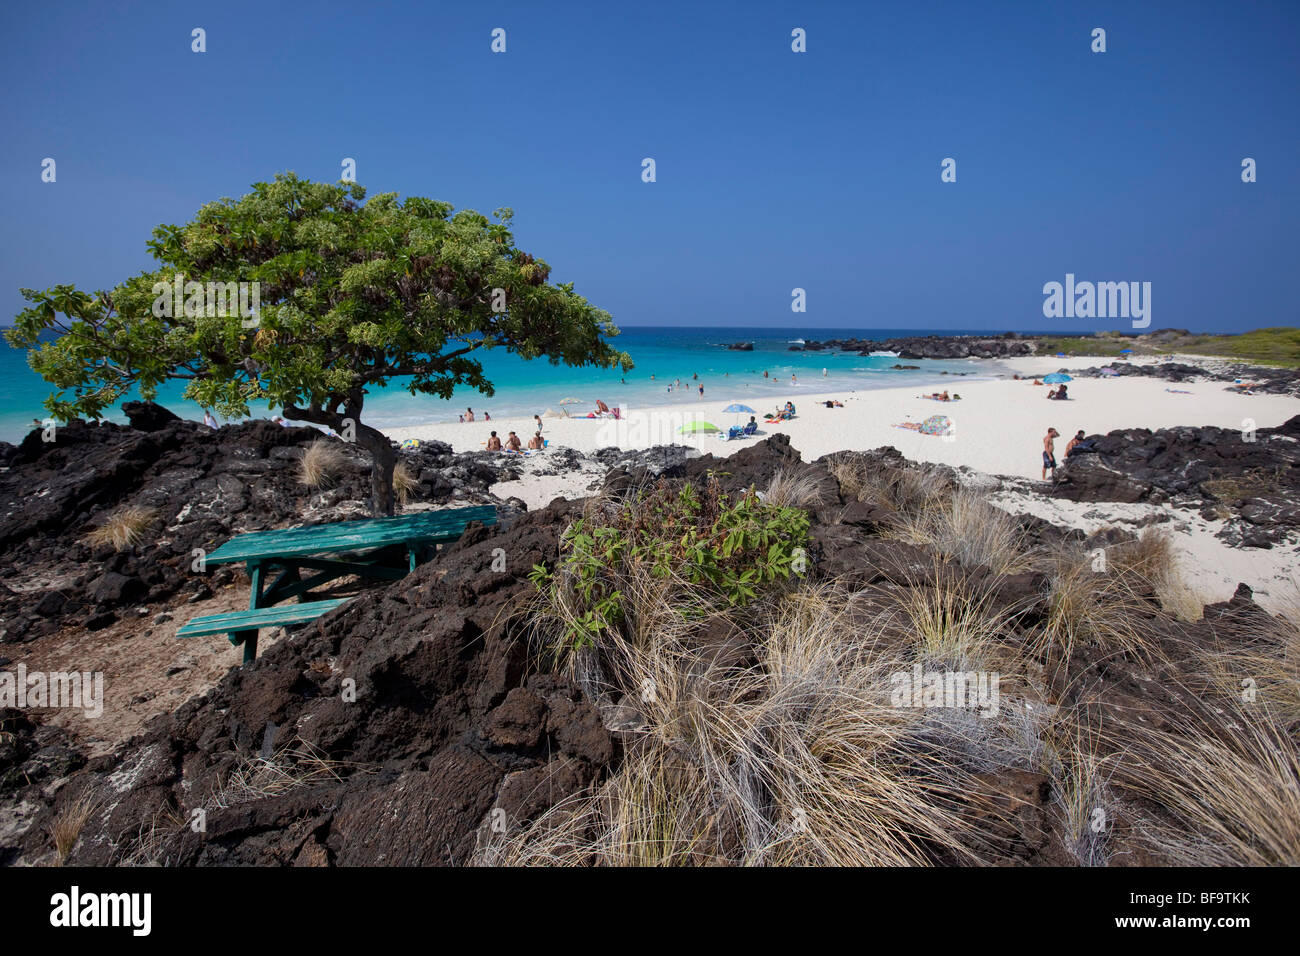 Kua bay hawaii hi-res stock photography and images - Alamy